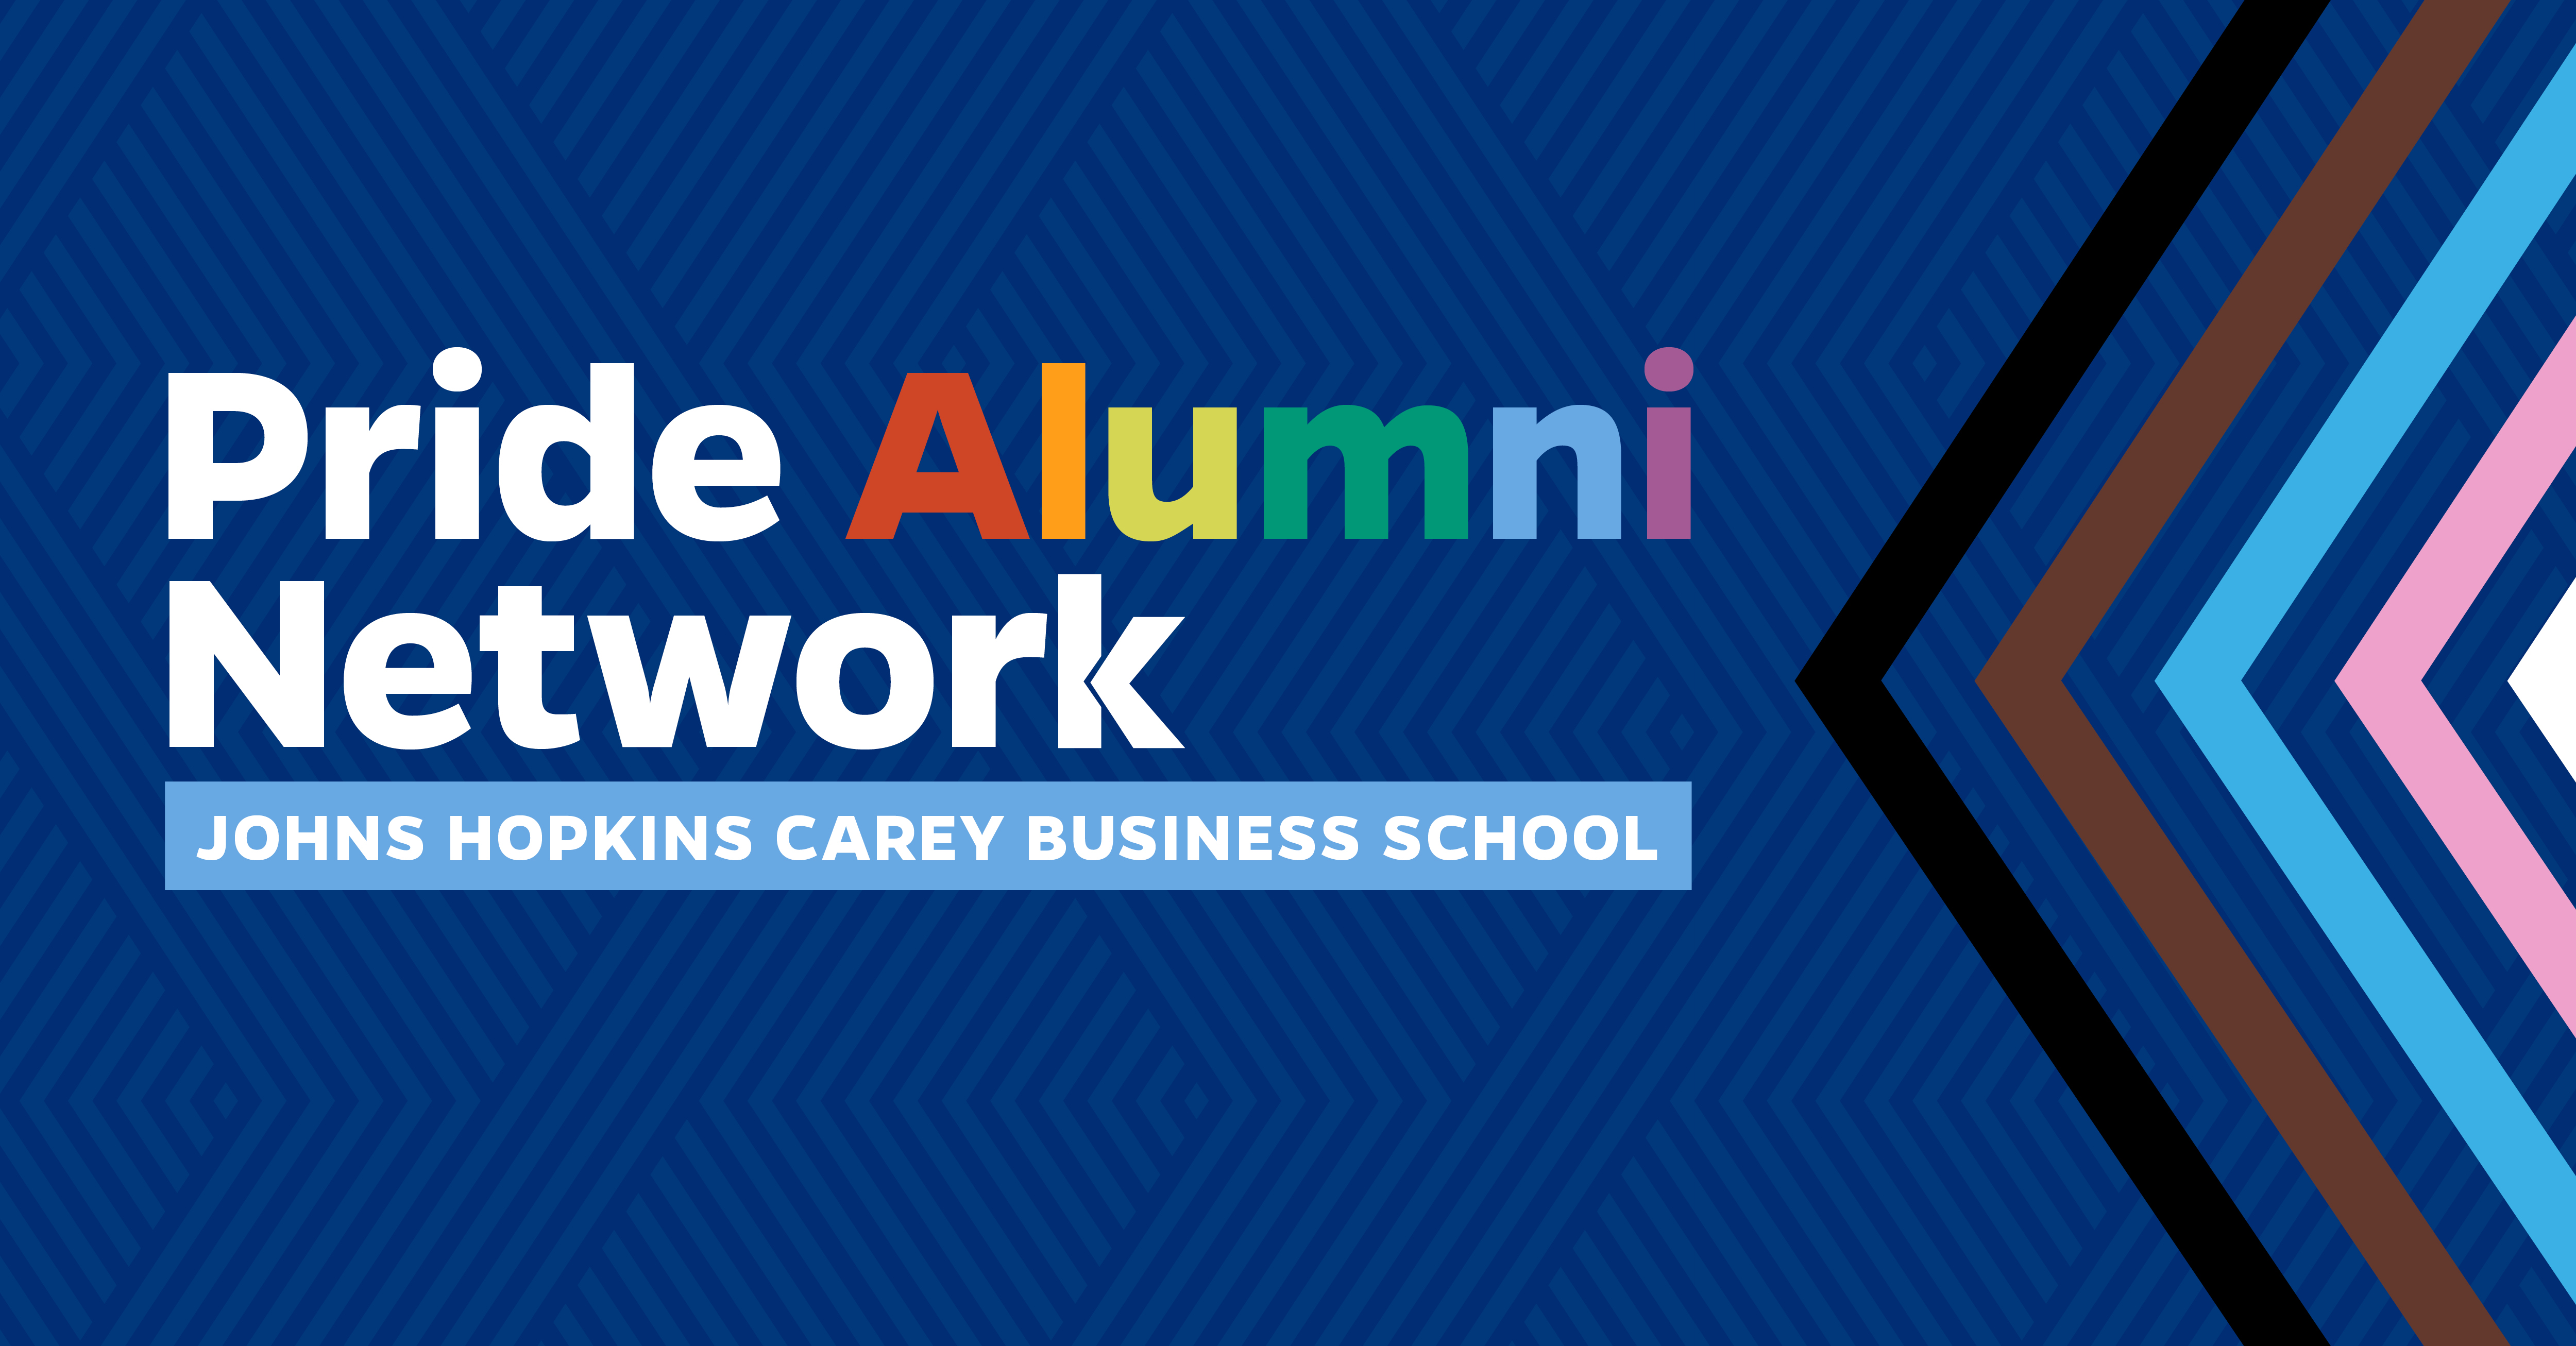 Carey Business School Pride Alumni Network Launch Party